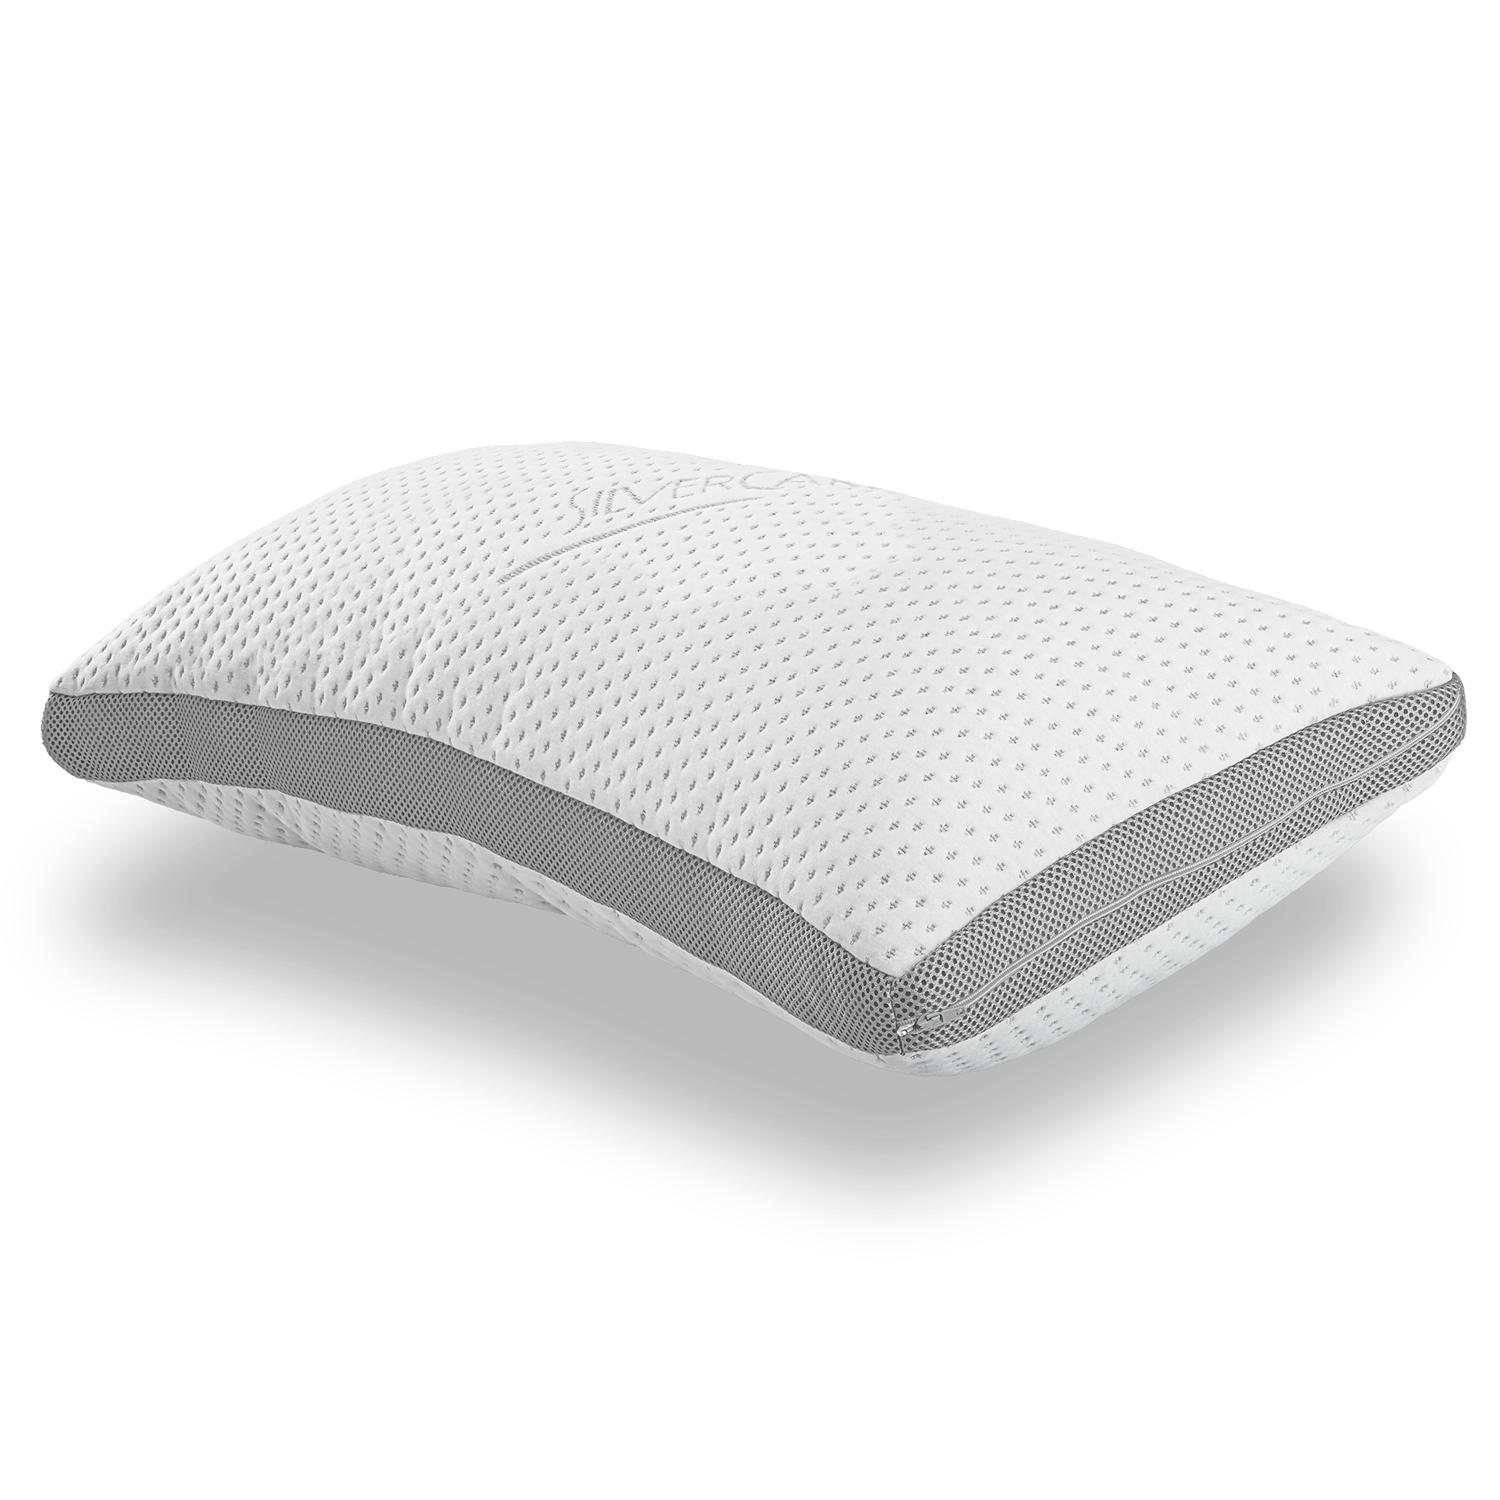 Supportho gel effect comfort sleeping pillow 40 x 80 cm